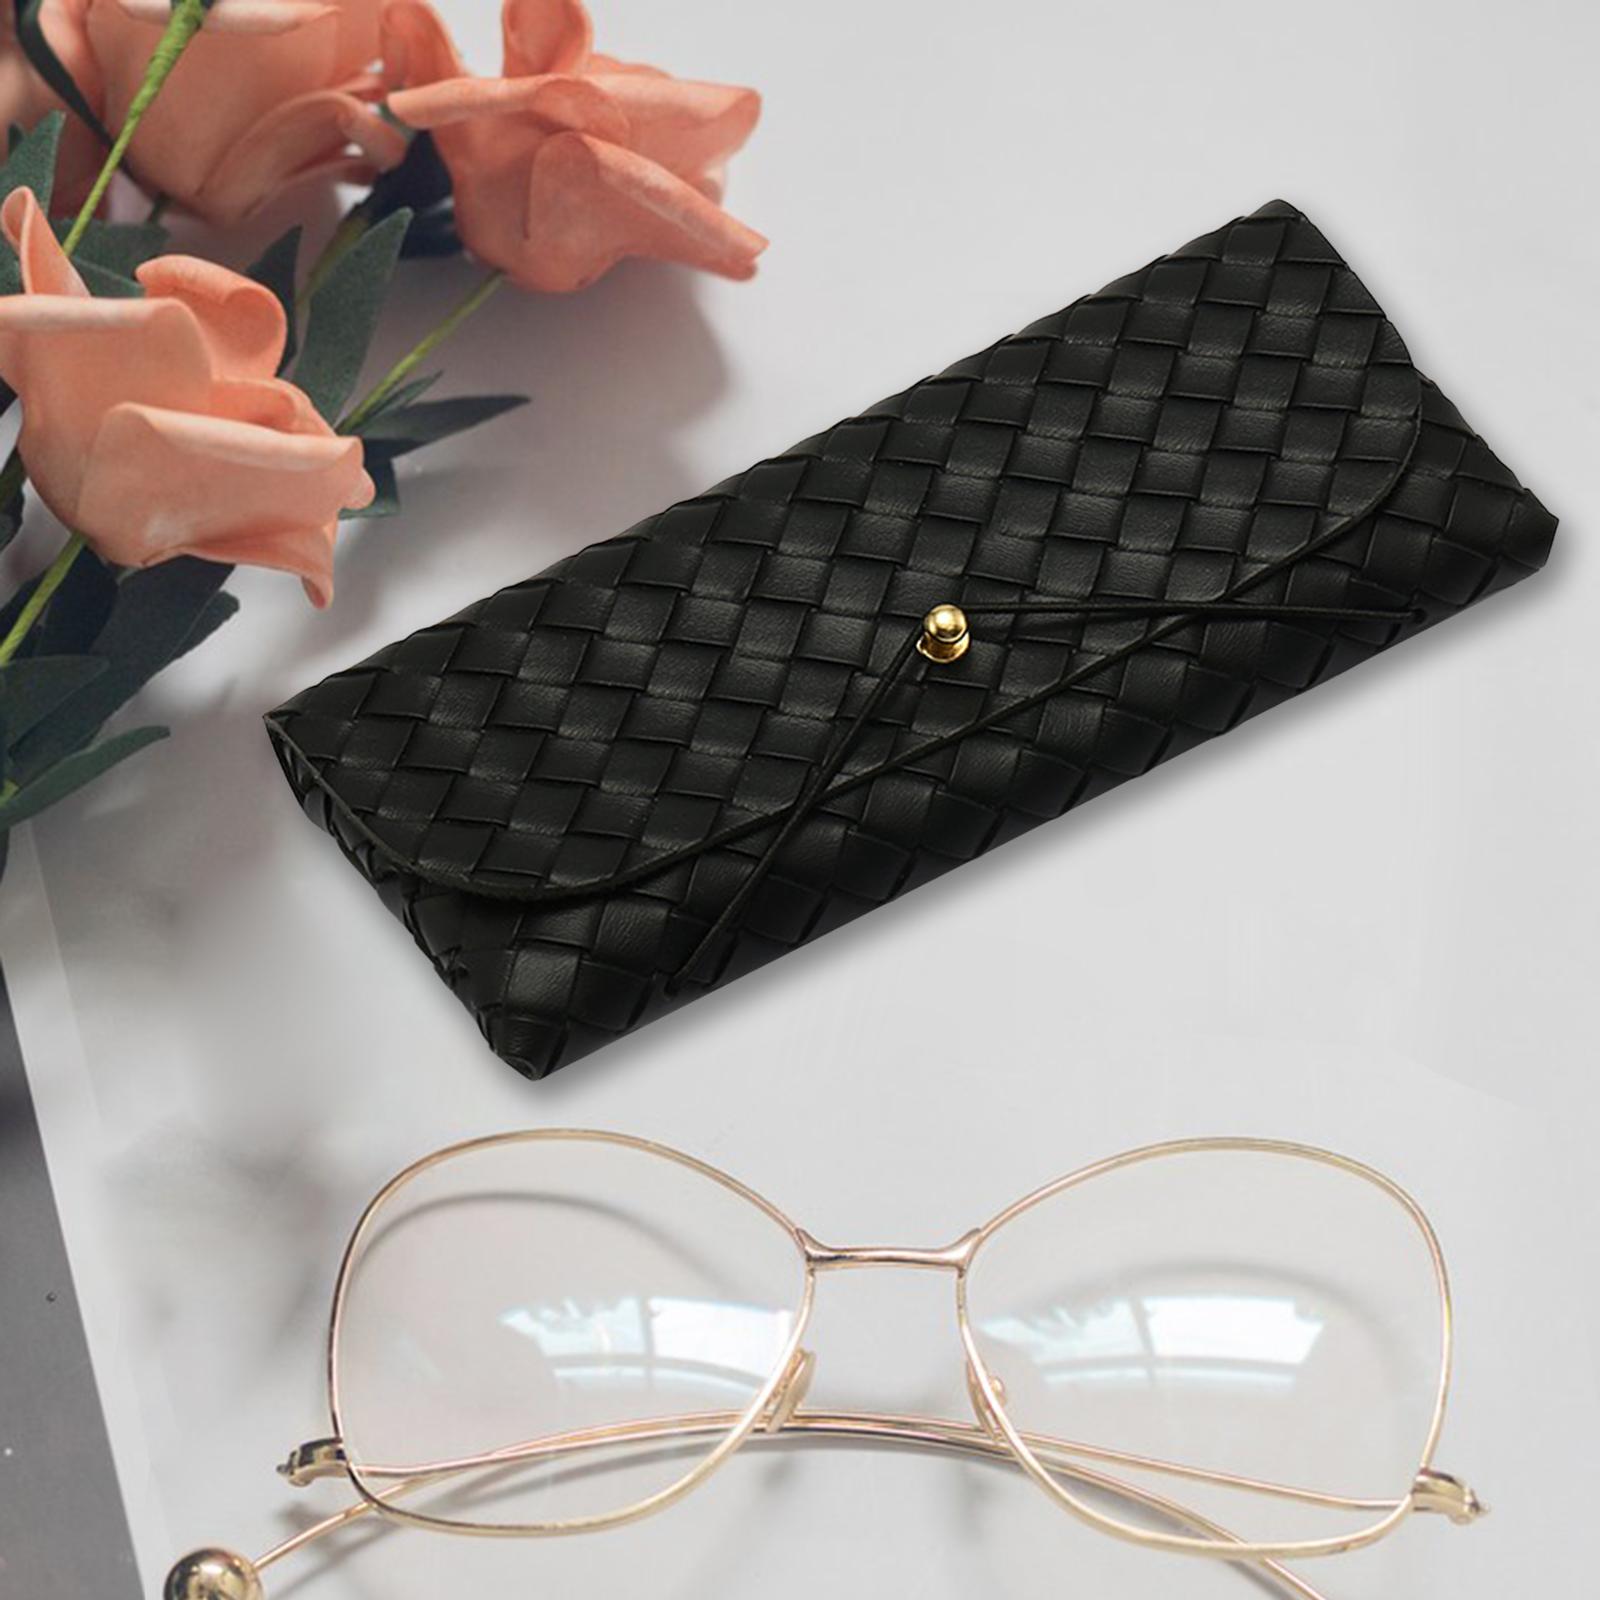 PU Leather Glasses Case Soft Storage Bag Portable Large Travel Eyeglass Case Style C 